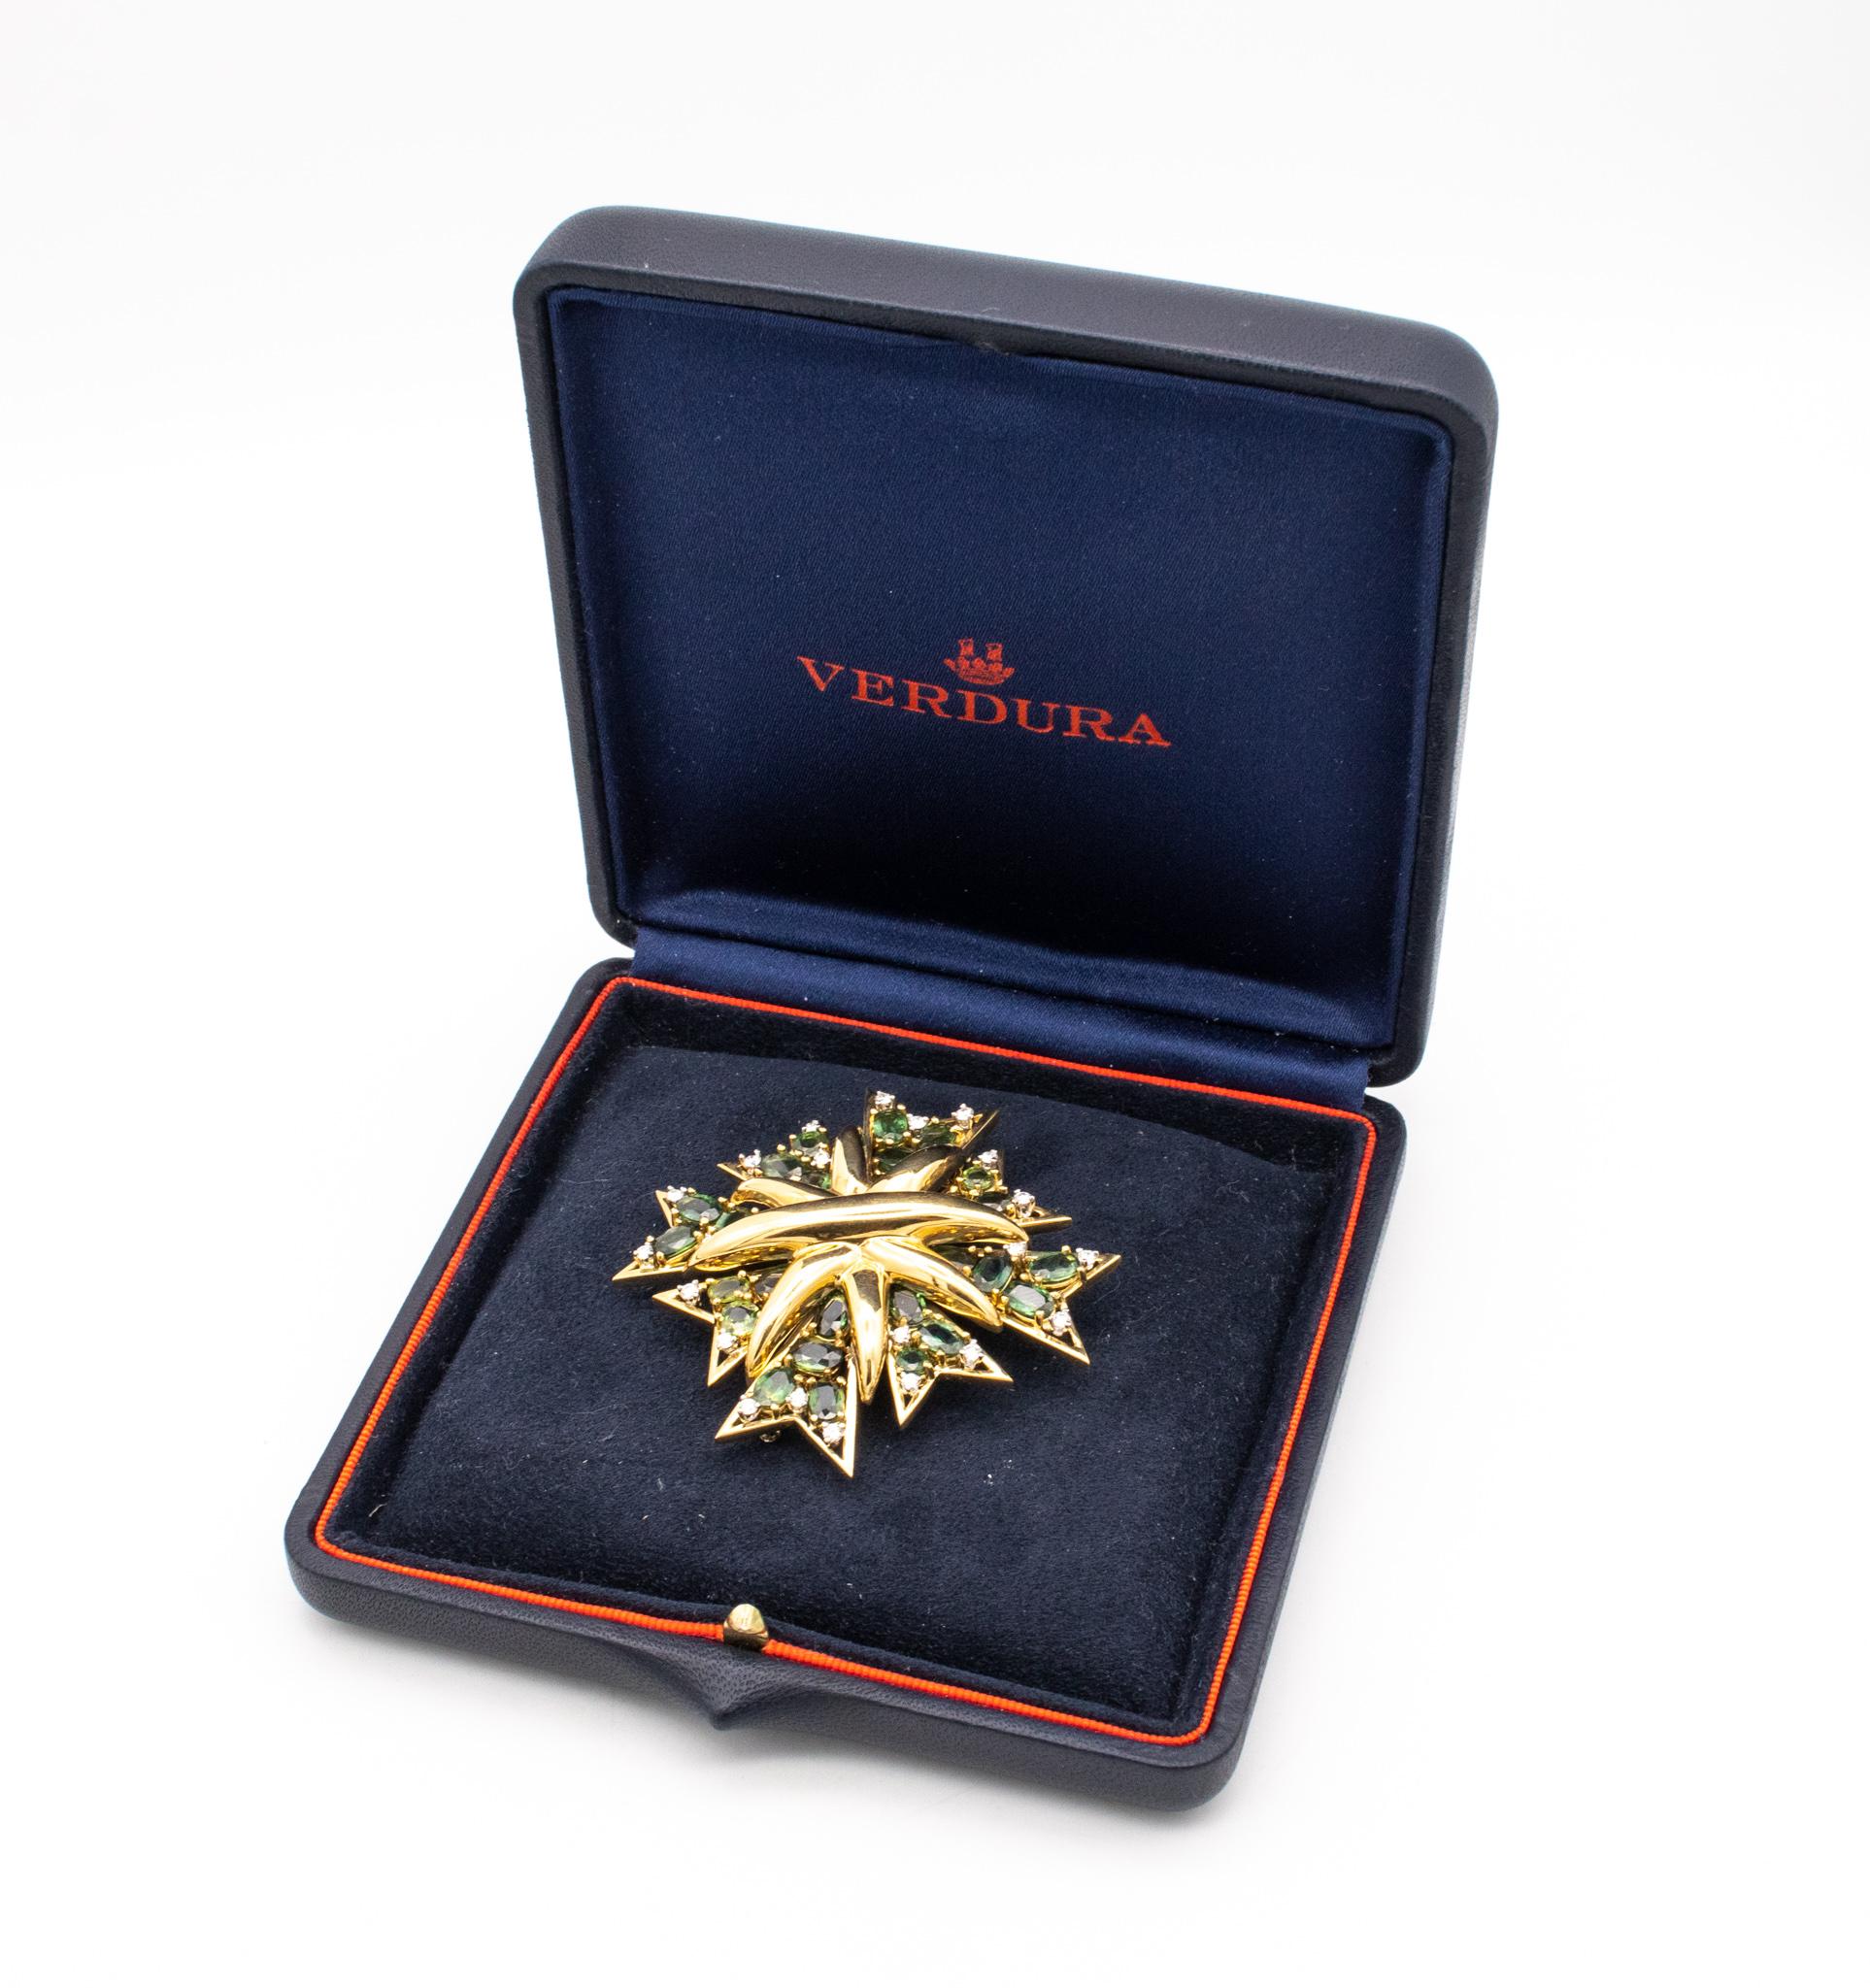 Verdura Maltese Brooch Pendant 18Kt Gold With 31.1 Ctw In Diamonds & Tourmaline For Sale 2